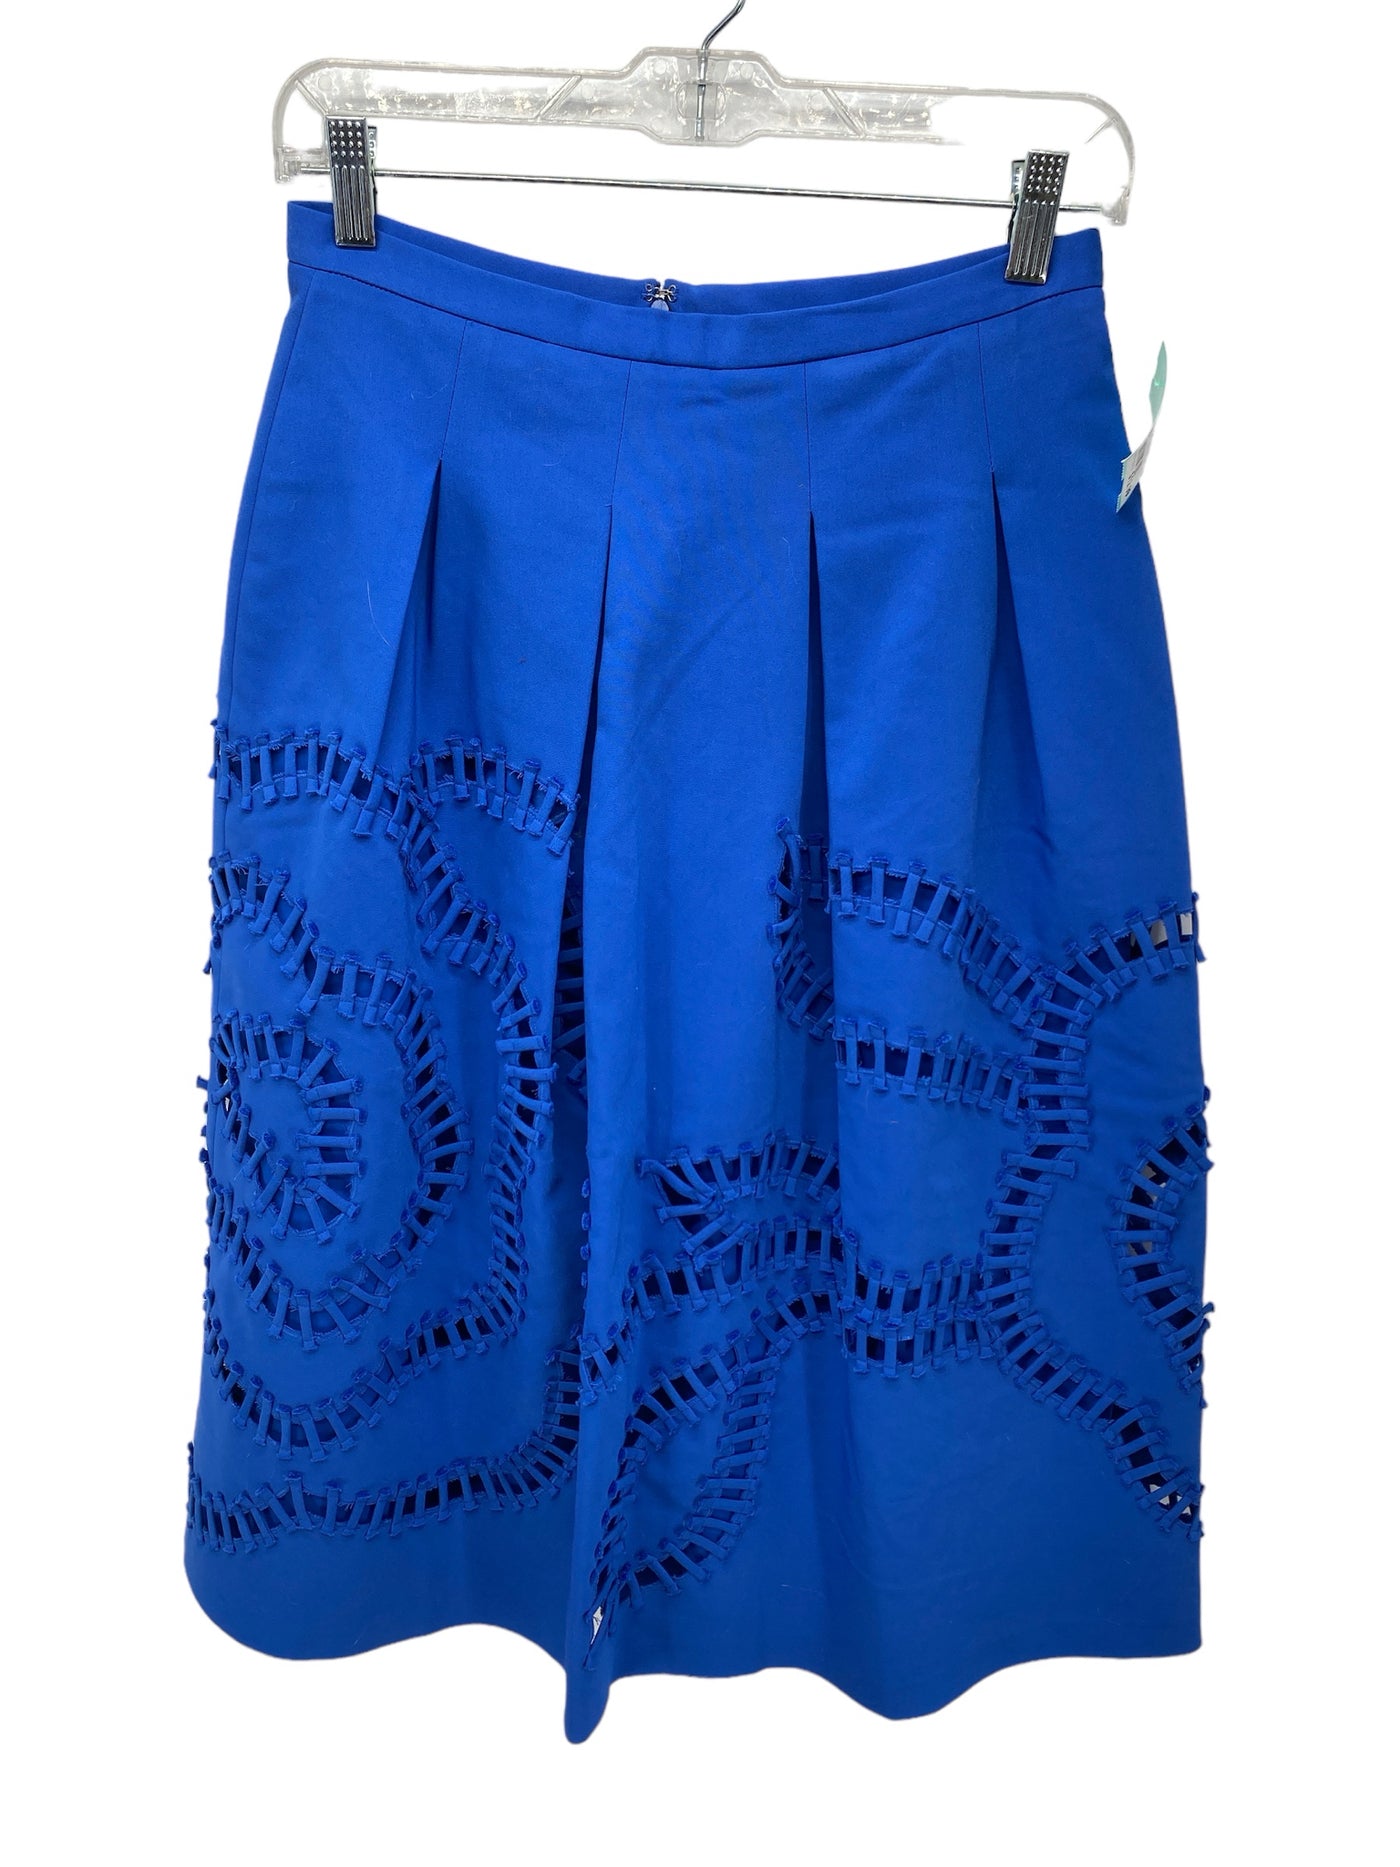 Susan Bristol Misses Size 6 Blue Skirt